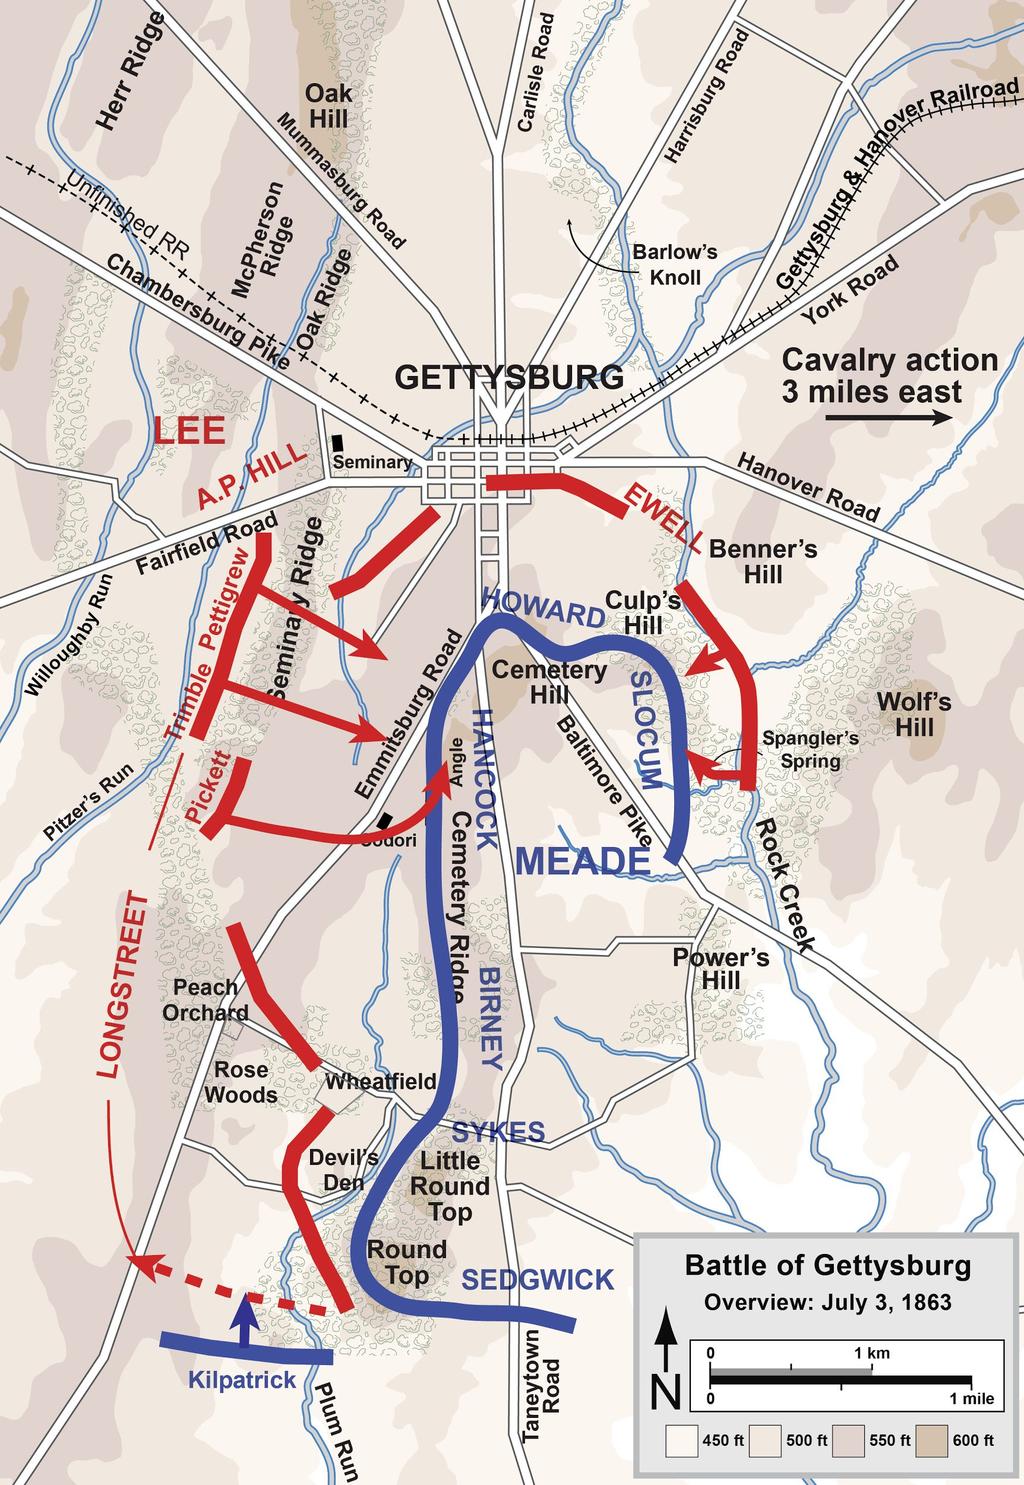 Key Battle: Gettysburg April 2-4, 1863 (9D) Most decisive battle of the Civil War. 3 PA A day battle in Gettysburg,.